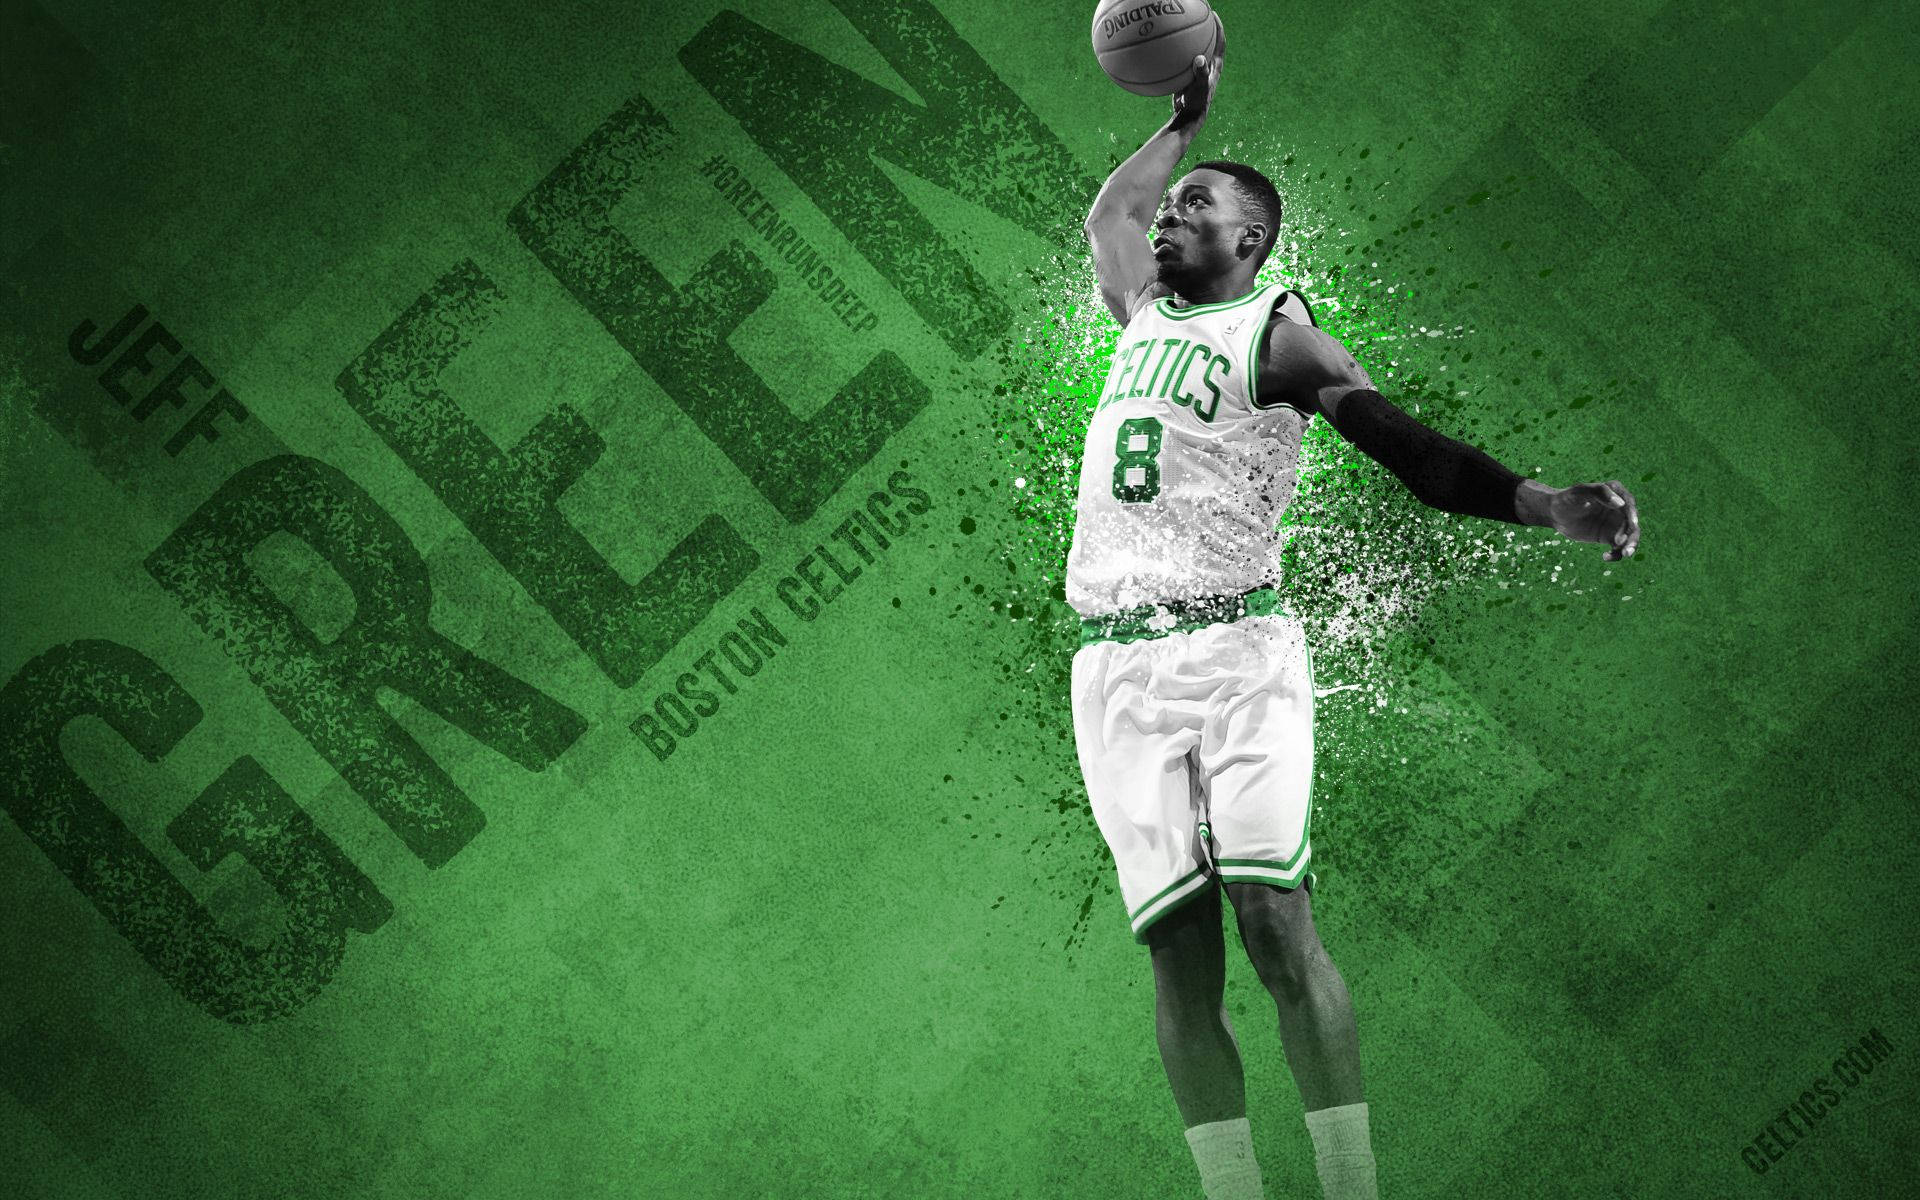 Celebrating Victory - The Boston Celtics Background